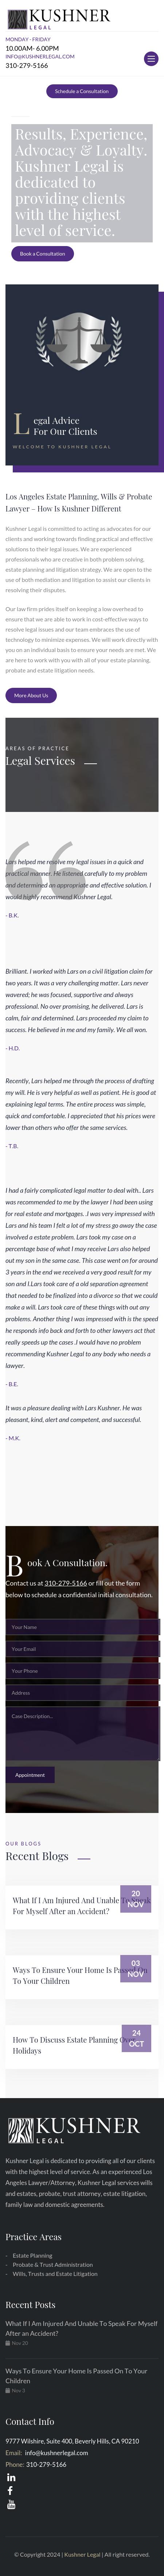 Kushner Legal - Beverly Hills CA Lawyers